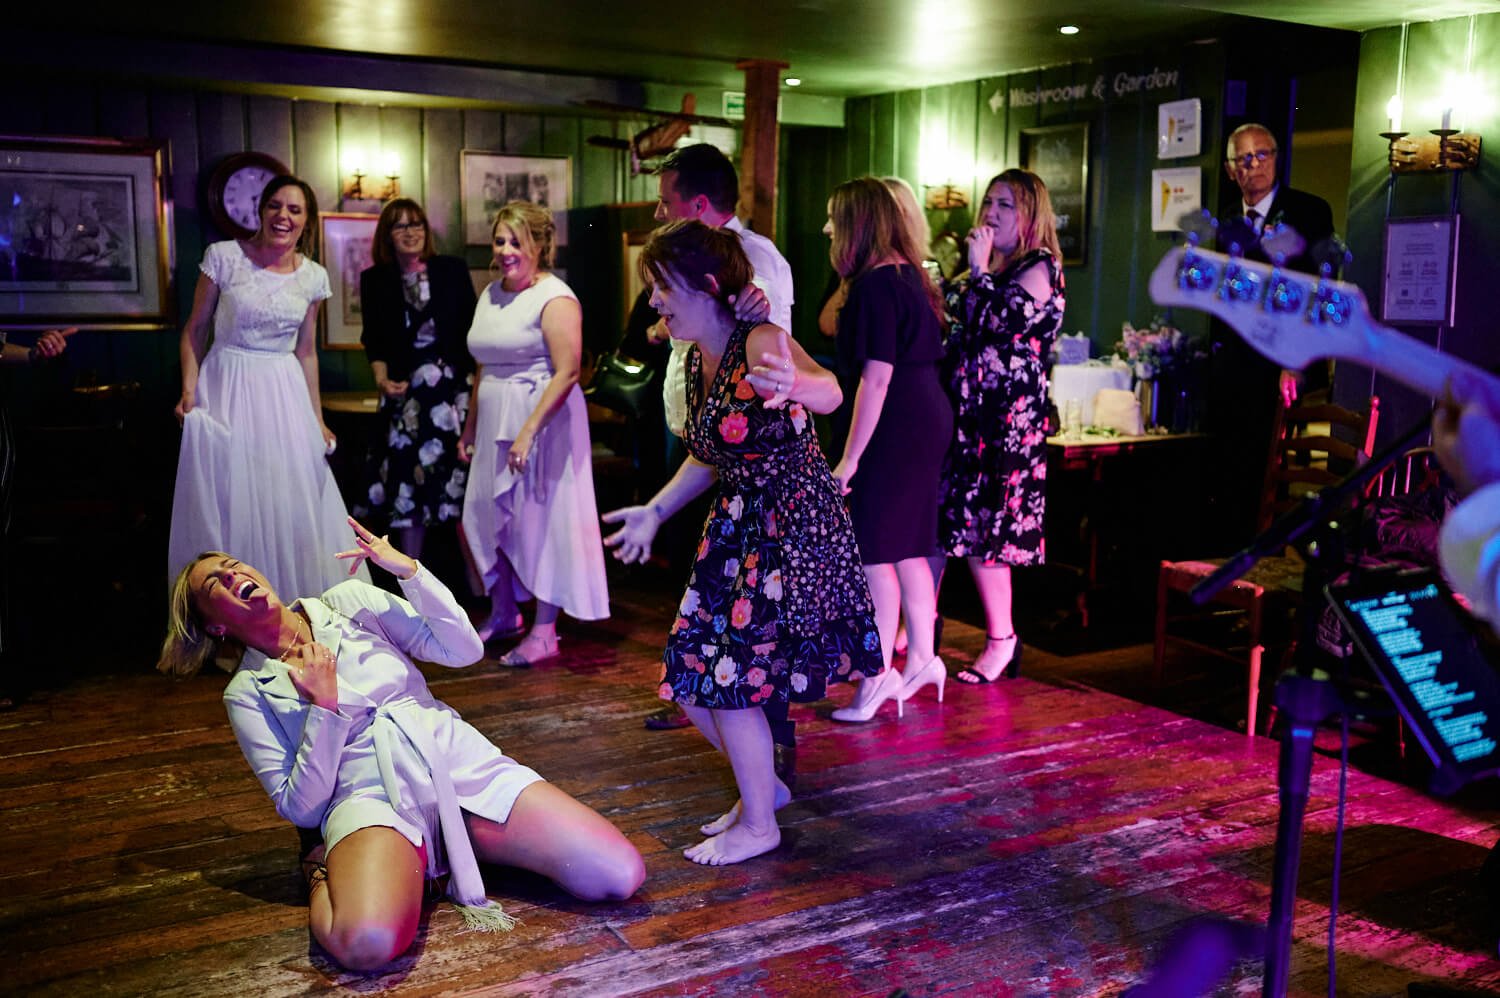 Wedding Photographer, Surrey | Leanne and Oli’s Farnham Wedding 39